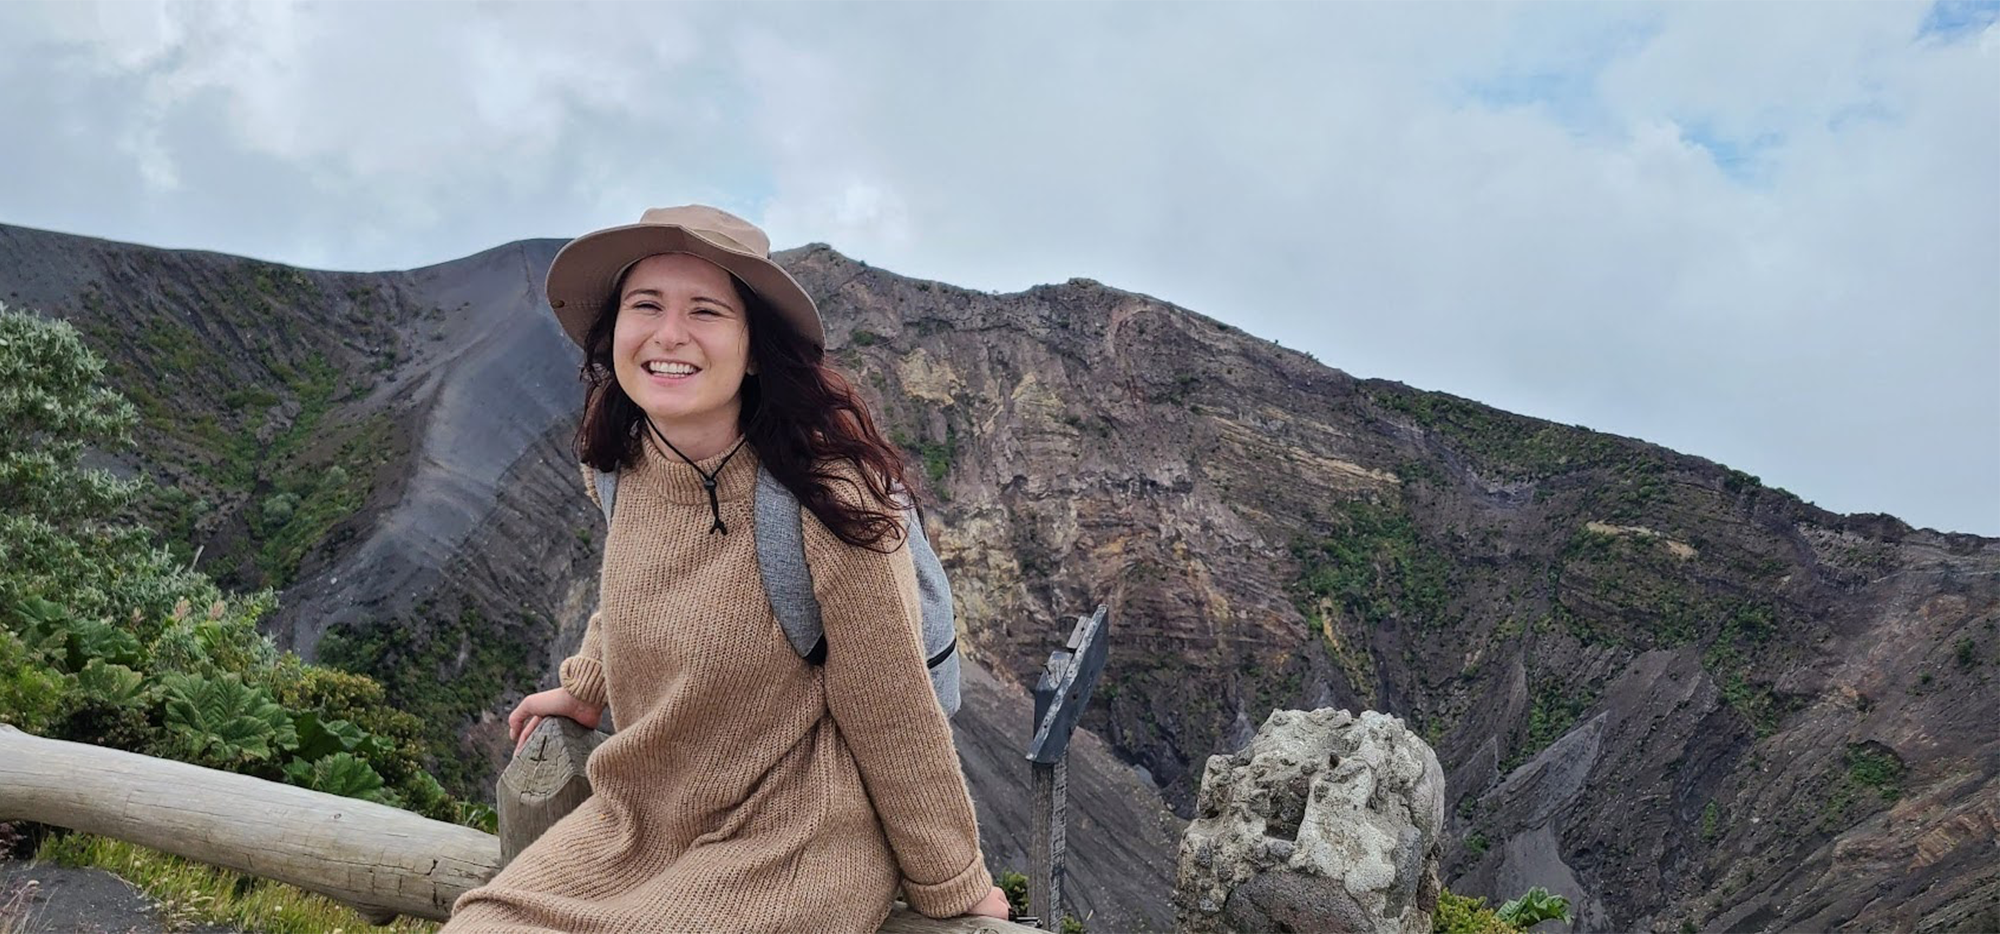 Iryna smiling on a hike around Volcan Irazu National Park